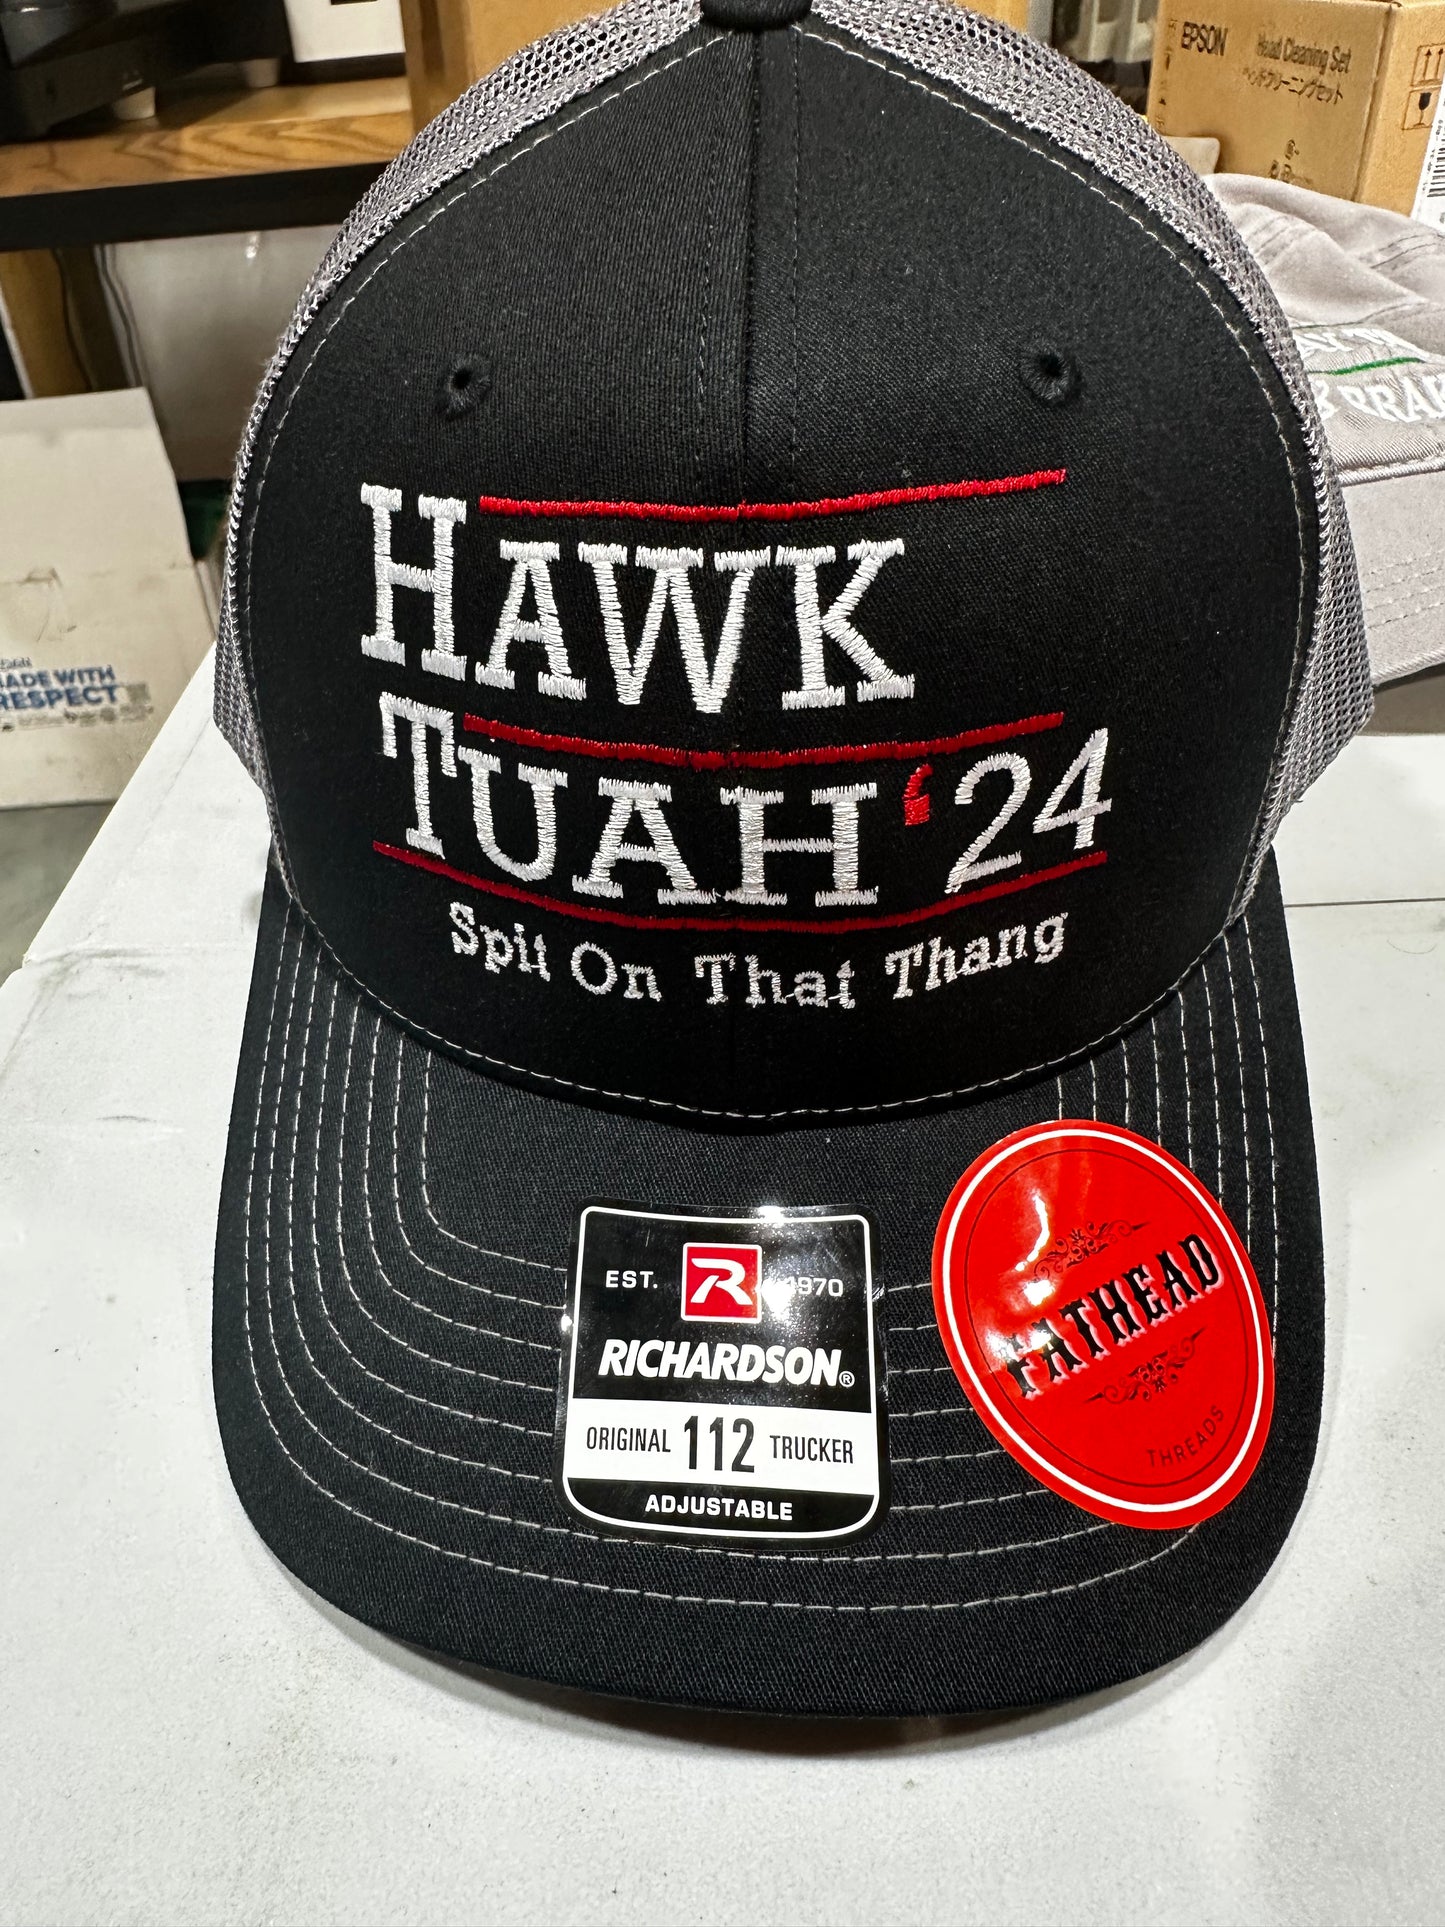 Hawk Tuah Hats